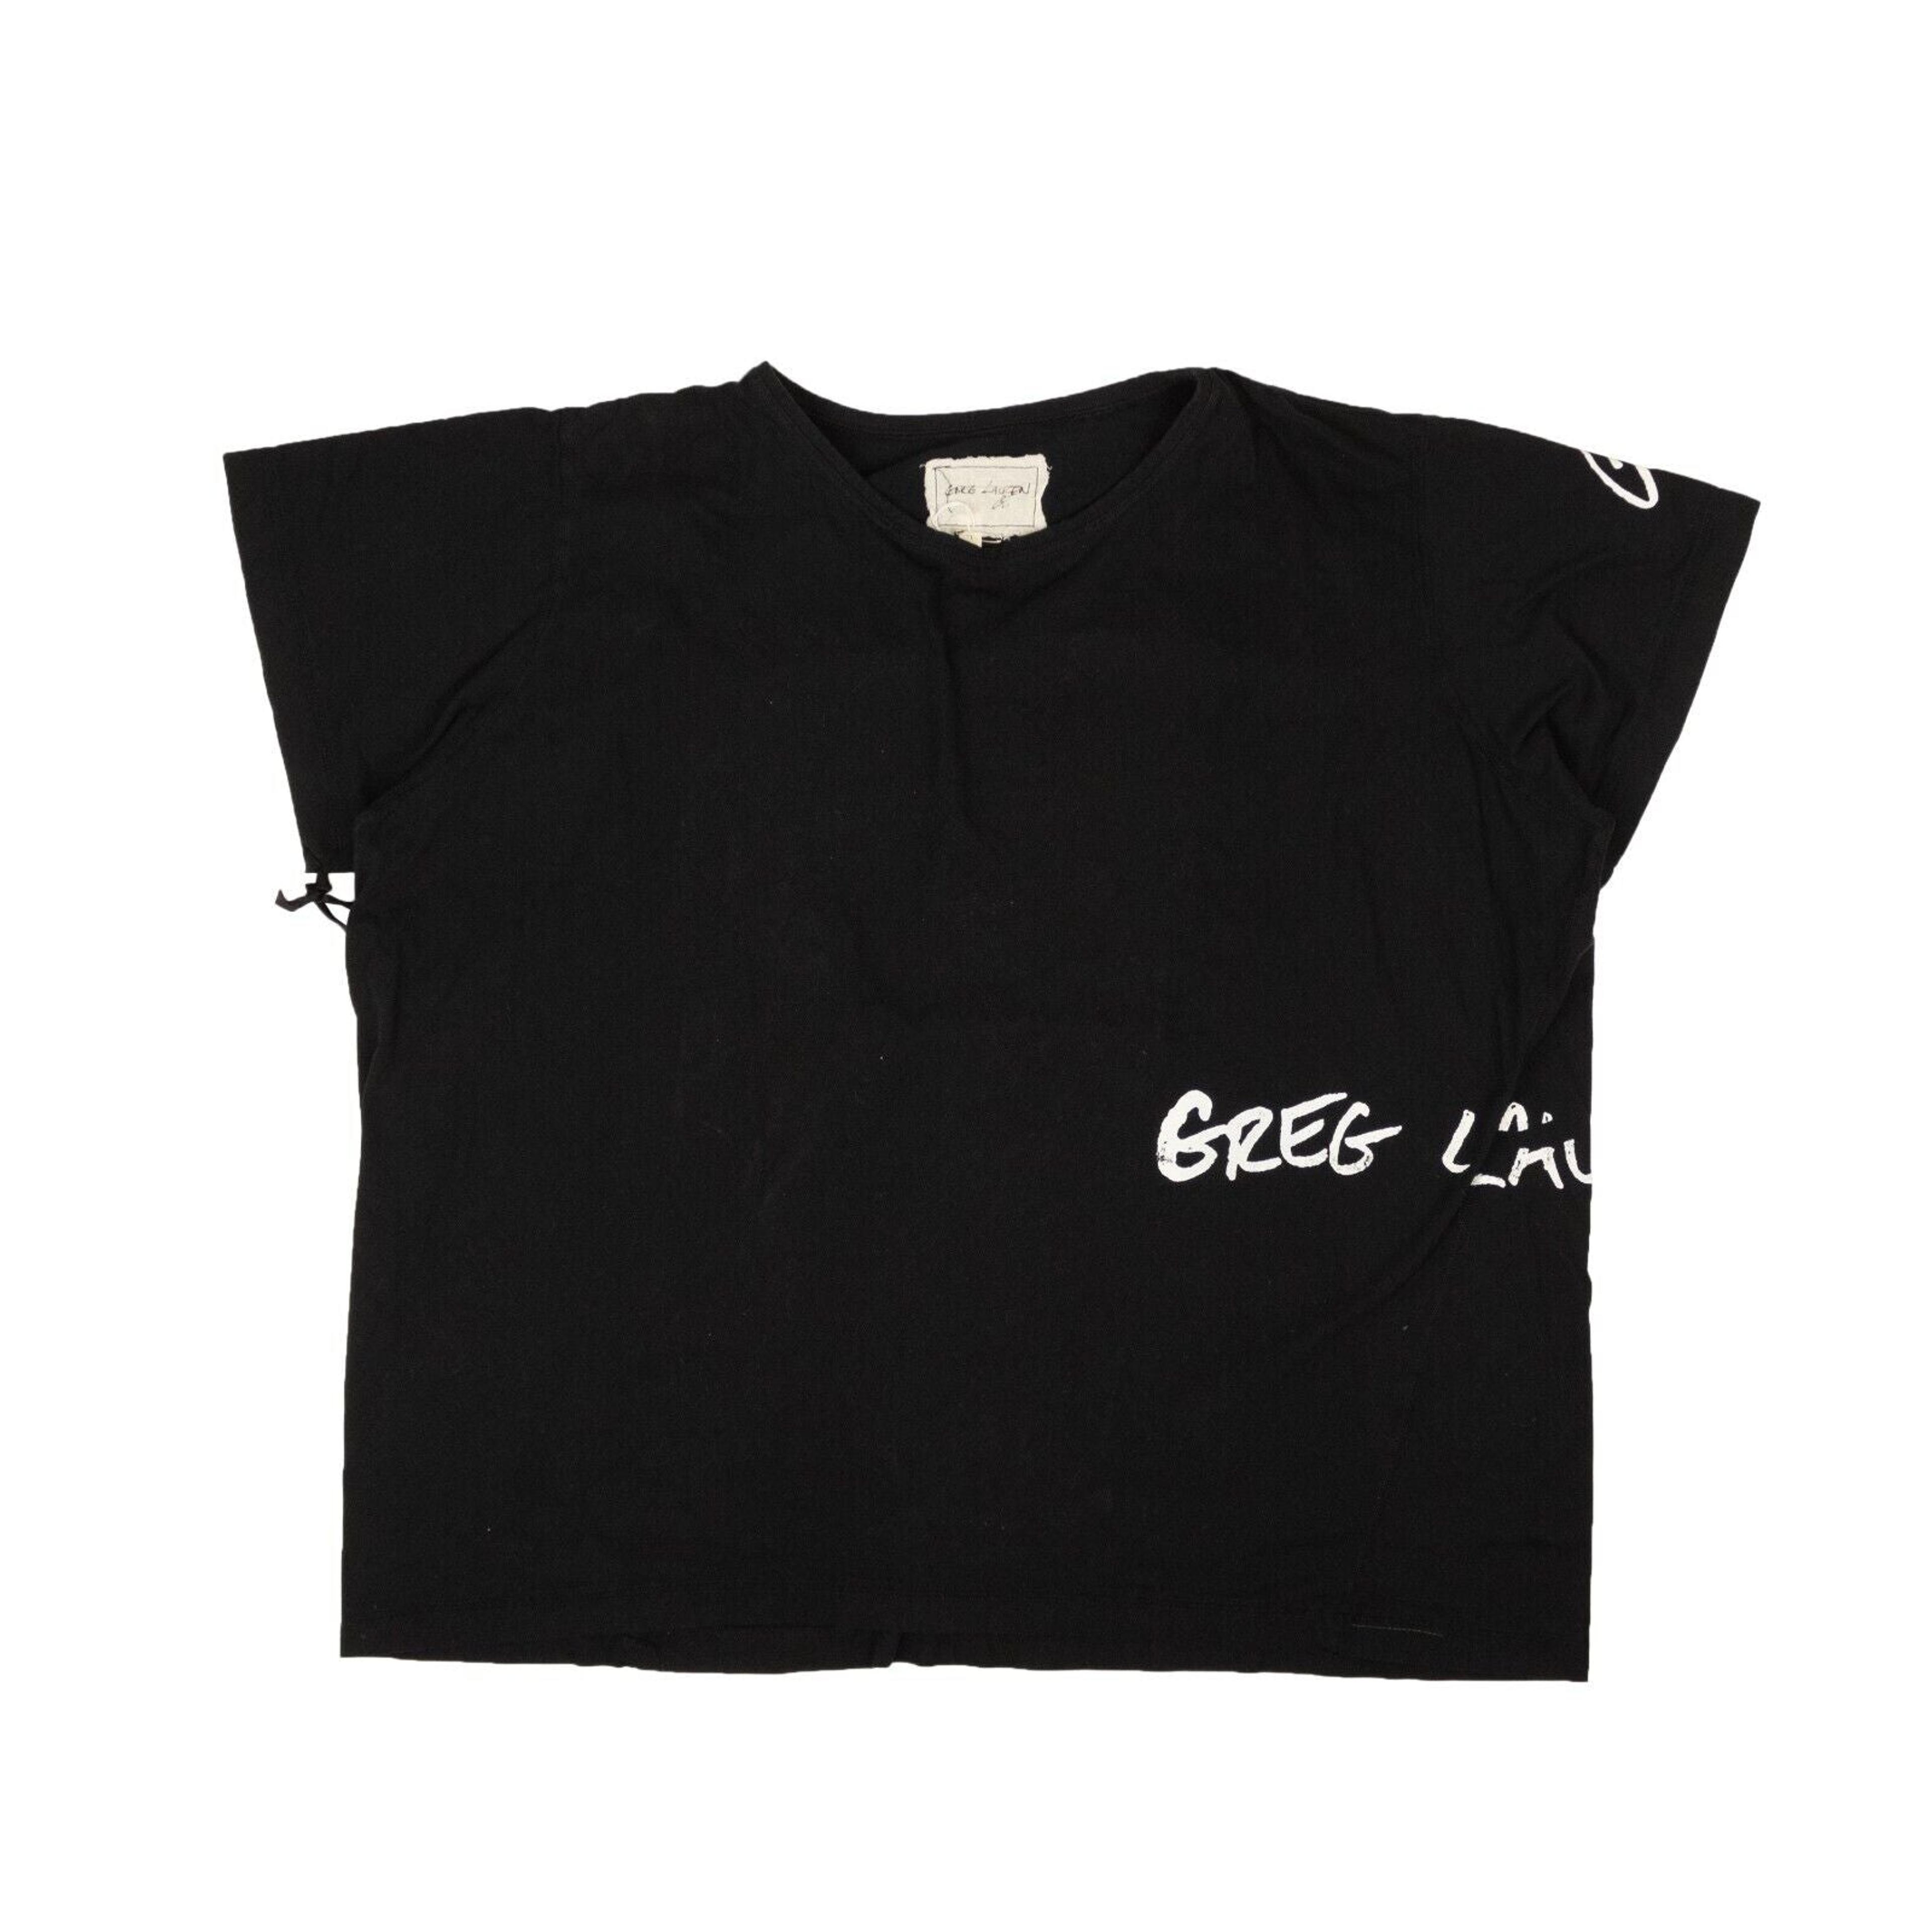 Alternate View 1 of Greg Lauren Deconstructed T-Shirt - Black